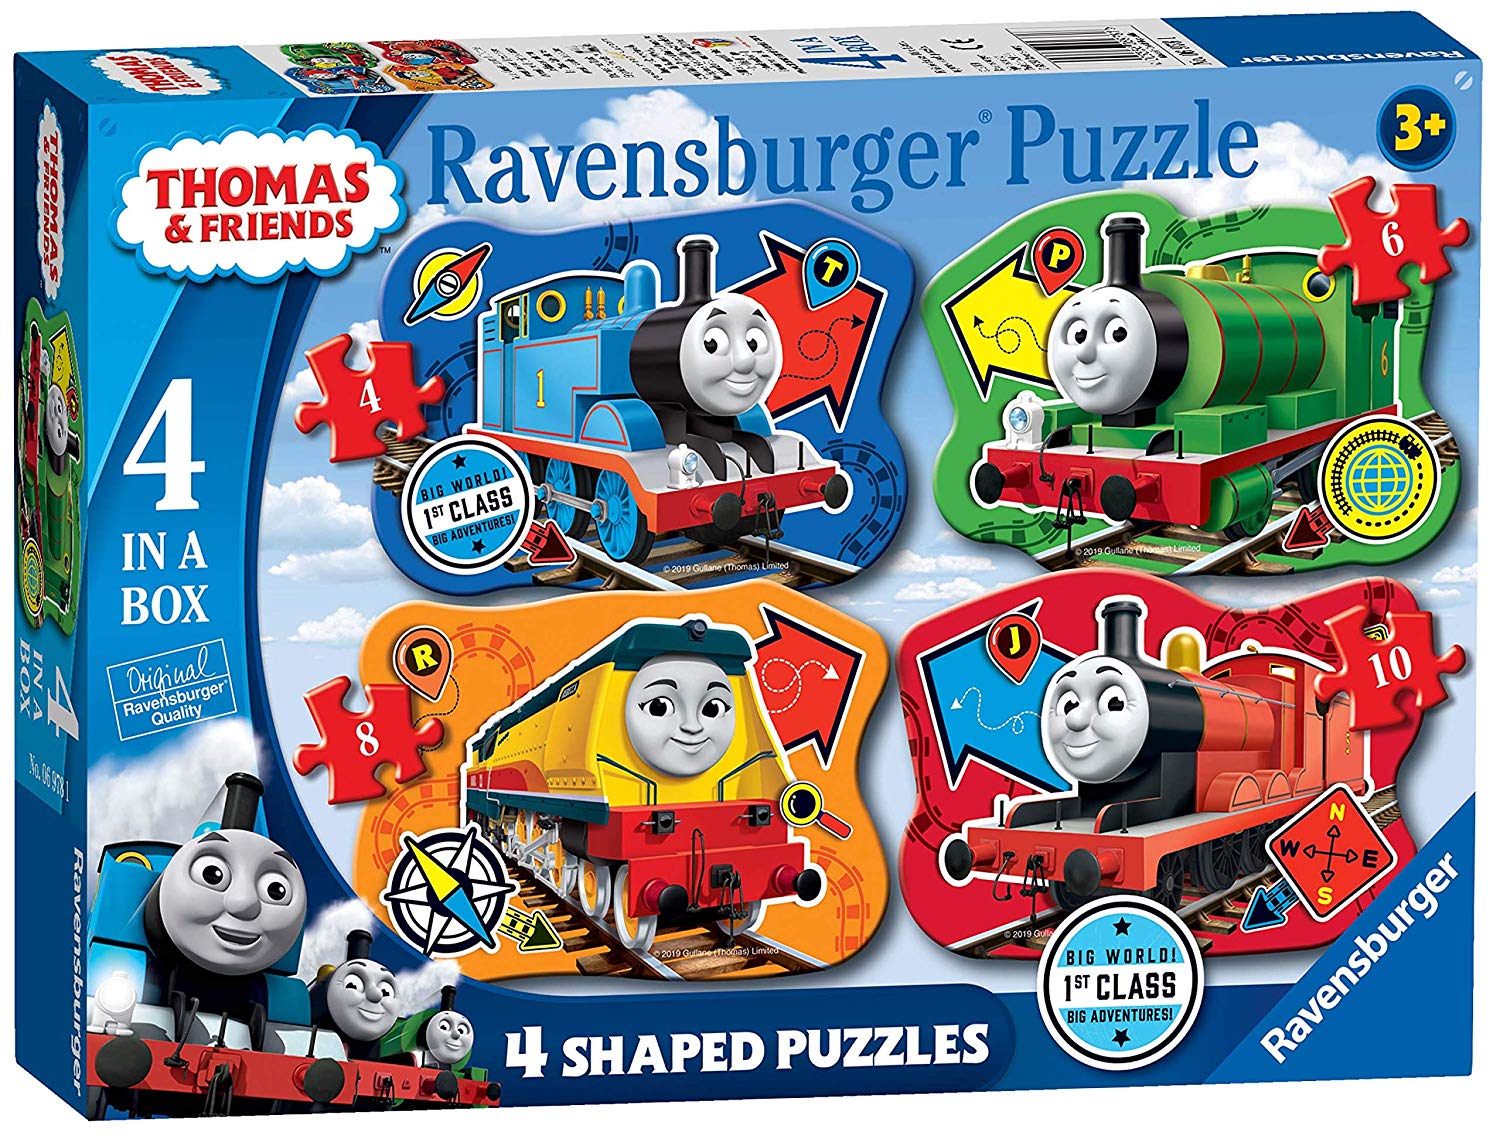 Ravensburger THOMAS & FRIENDS Large 4 Shaped Jigsaw Puzzles 